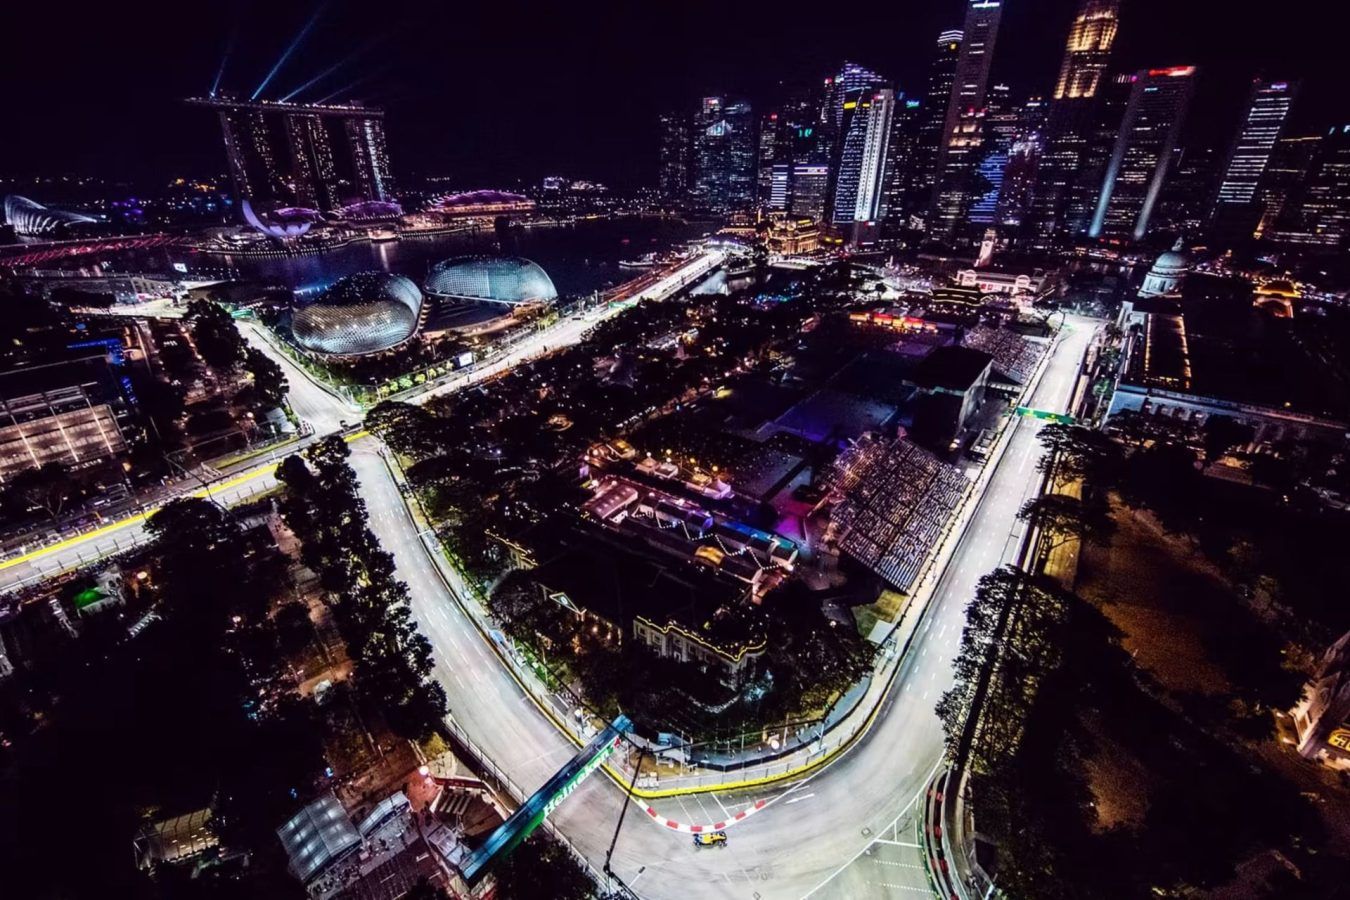 F1 Singapore 2023 Racing Highlights and Concert Lineups